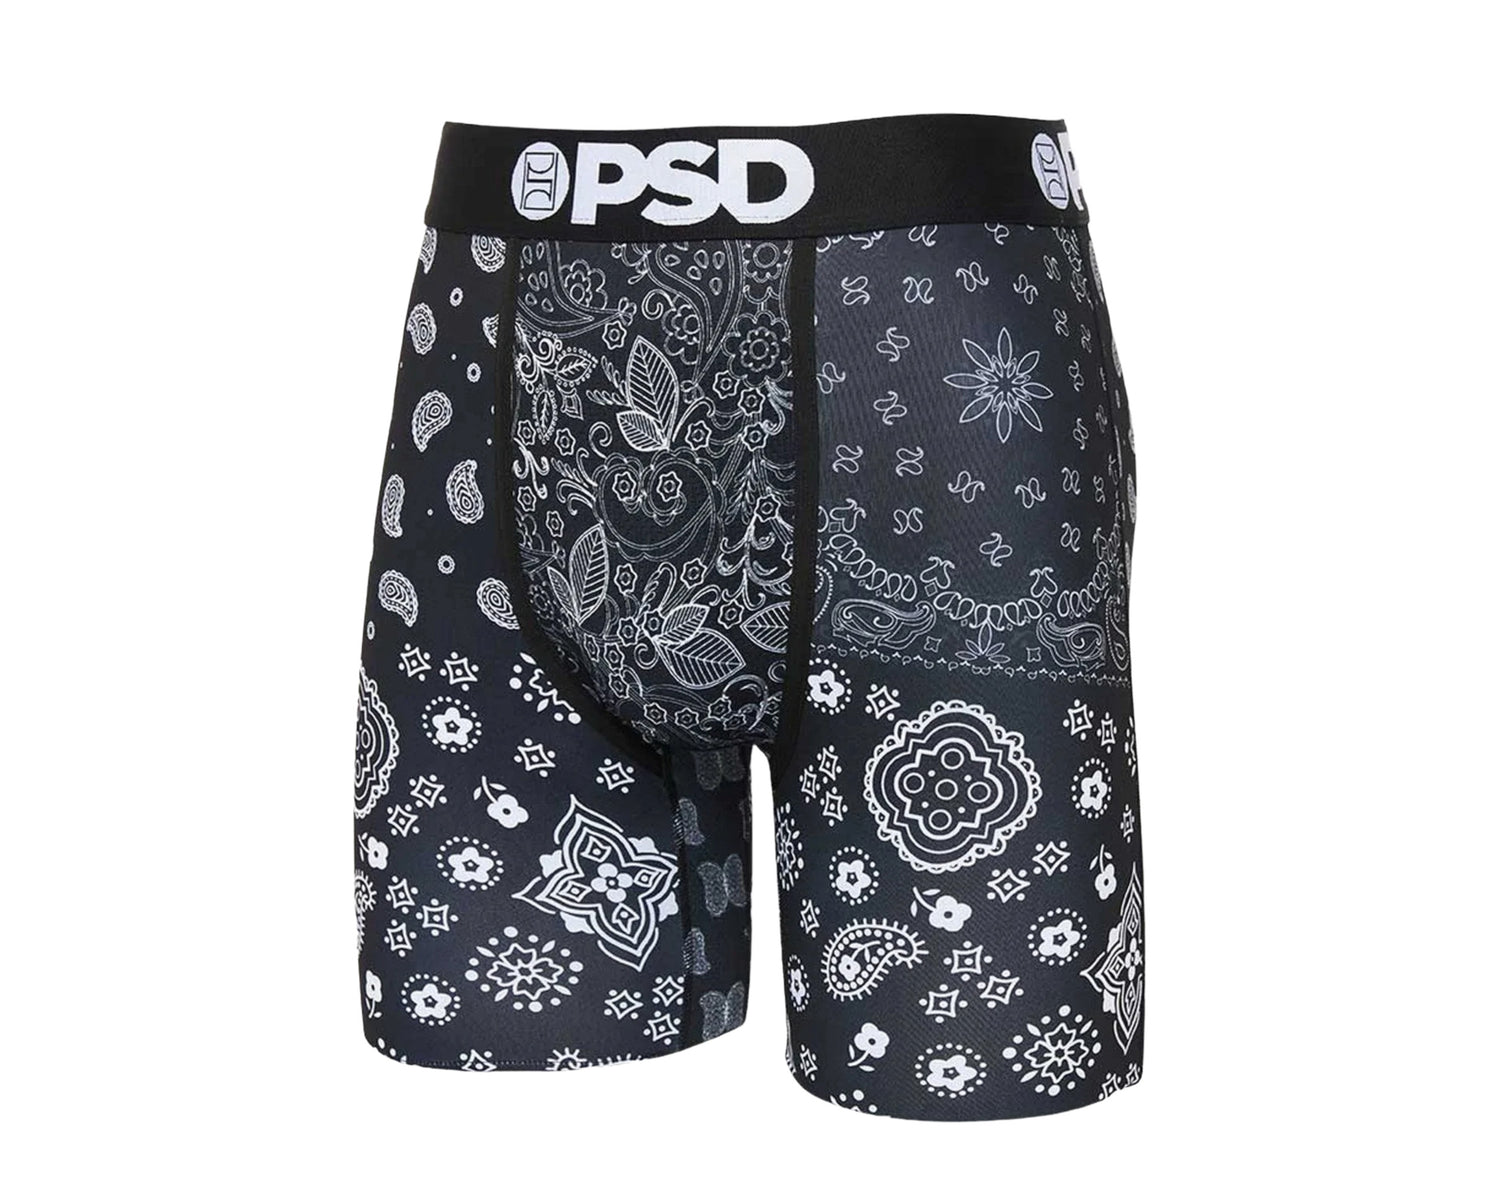 PSD Pop Bandana 3-Pack Boxer Briefs Men's Underwear